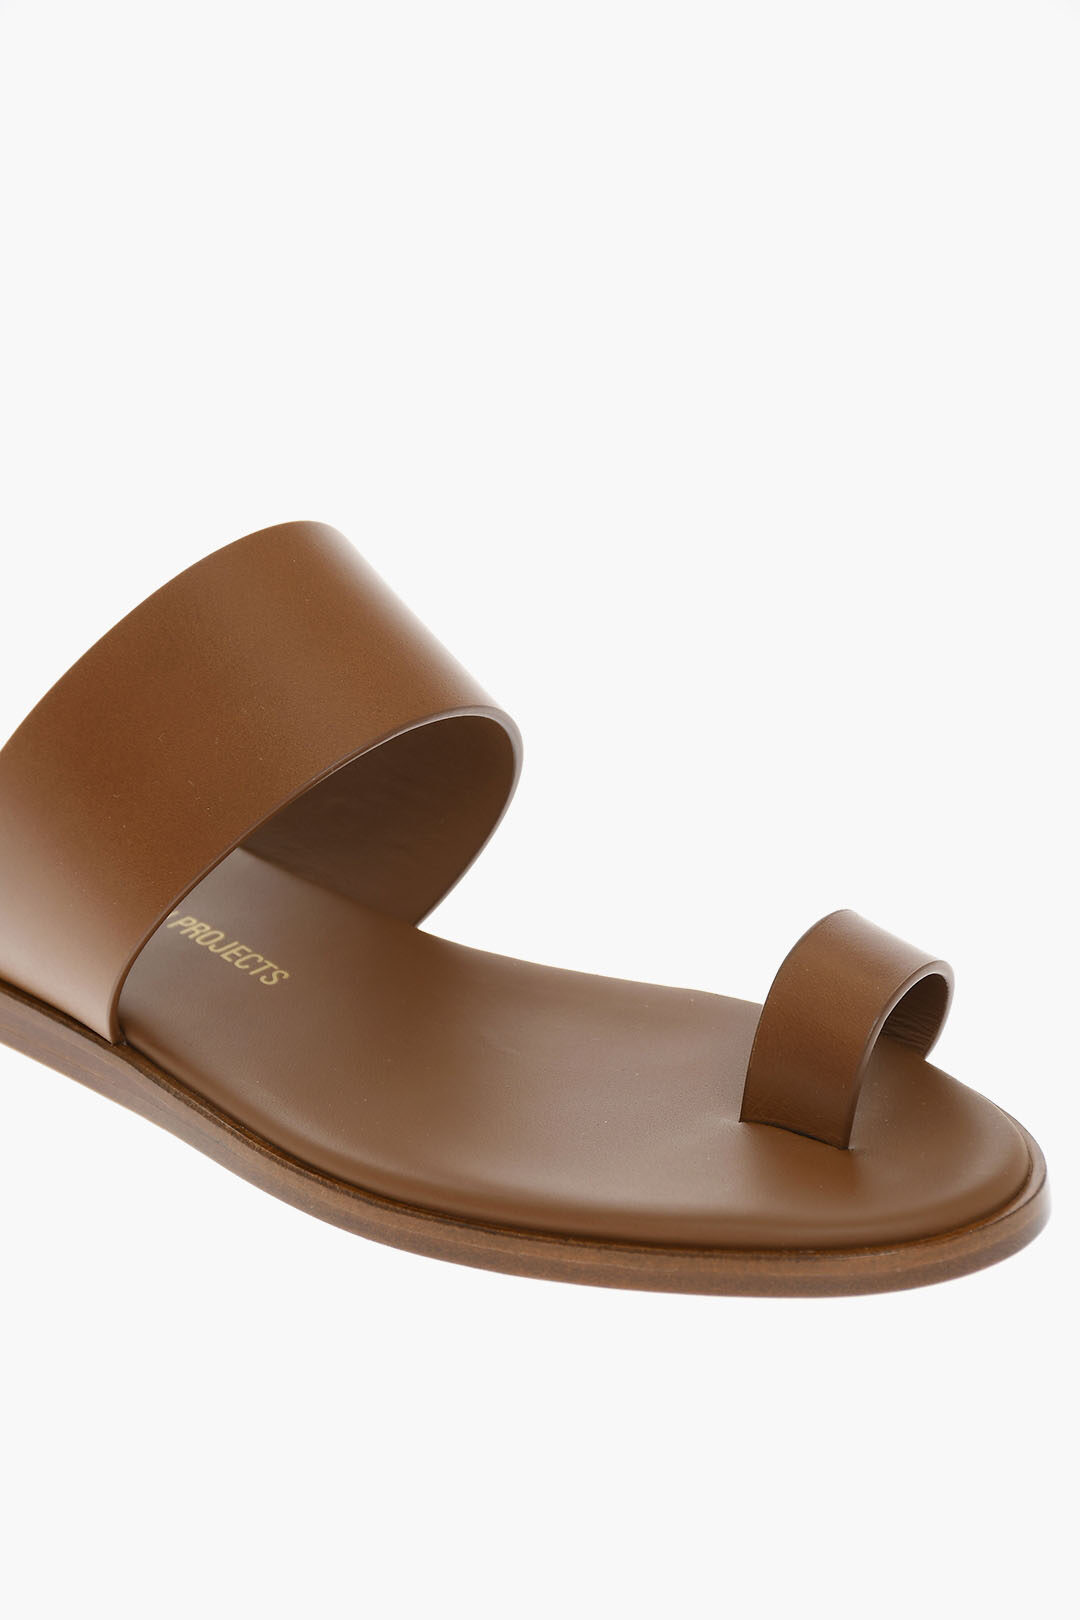 Merrell Hydro Free Roam Junior Sandal - 60% Off | SportsShoes.com